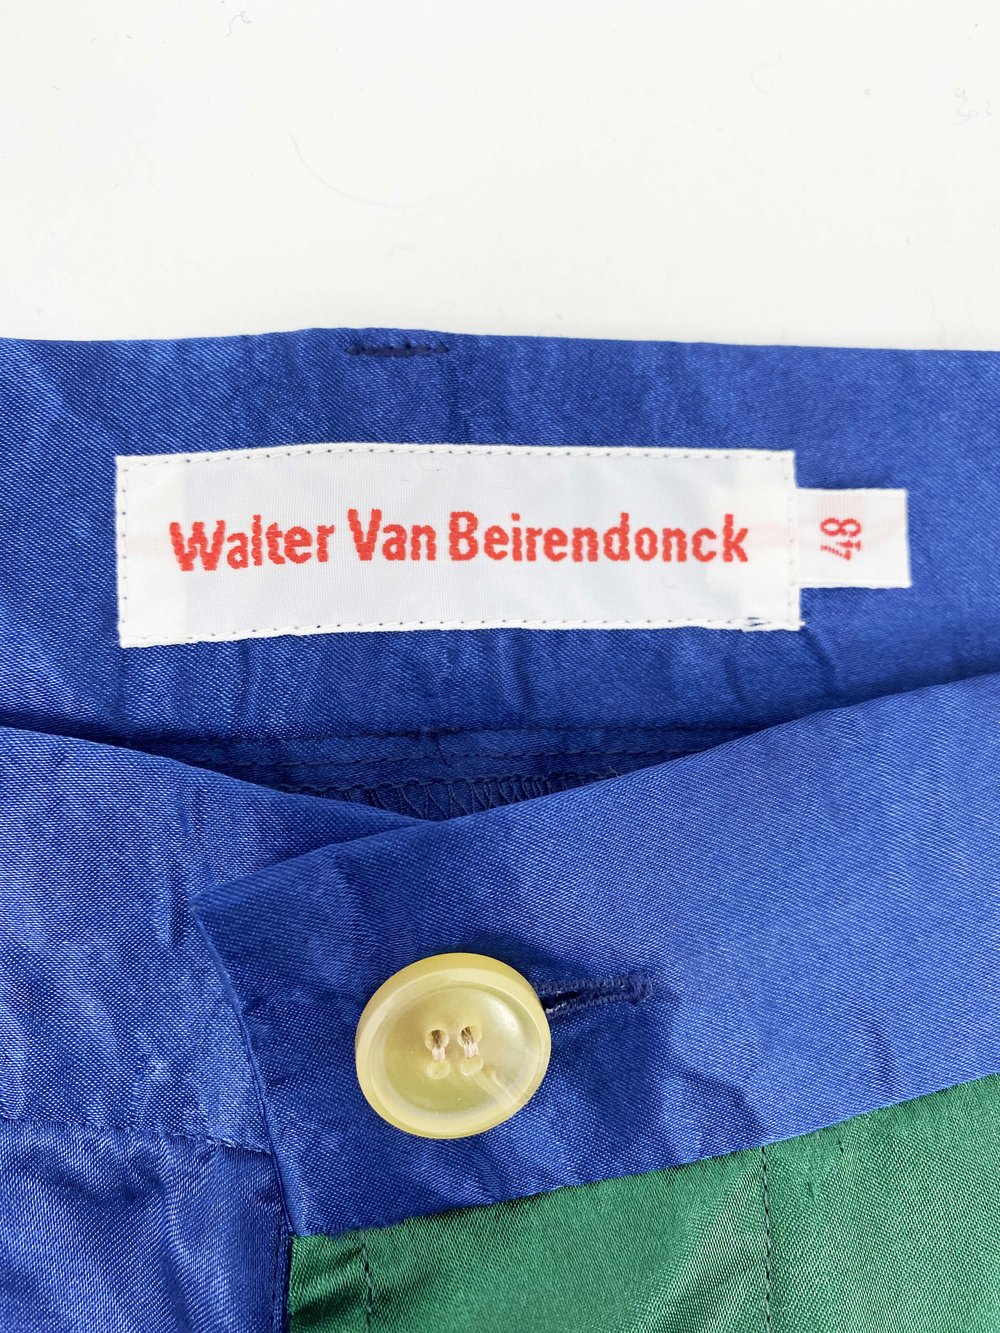 Walter Van Beirendonck panelled pants